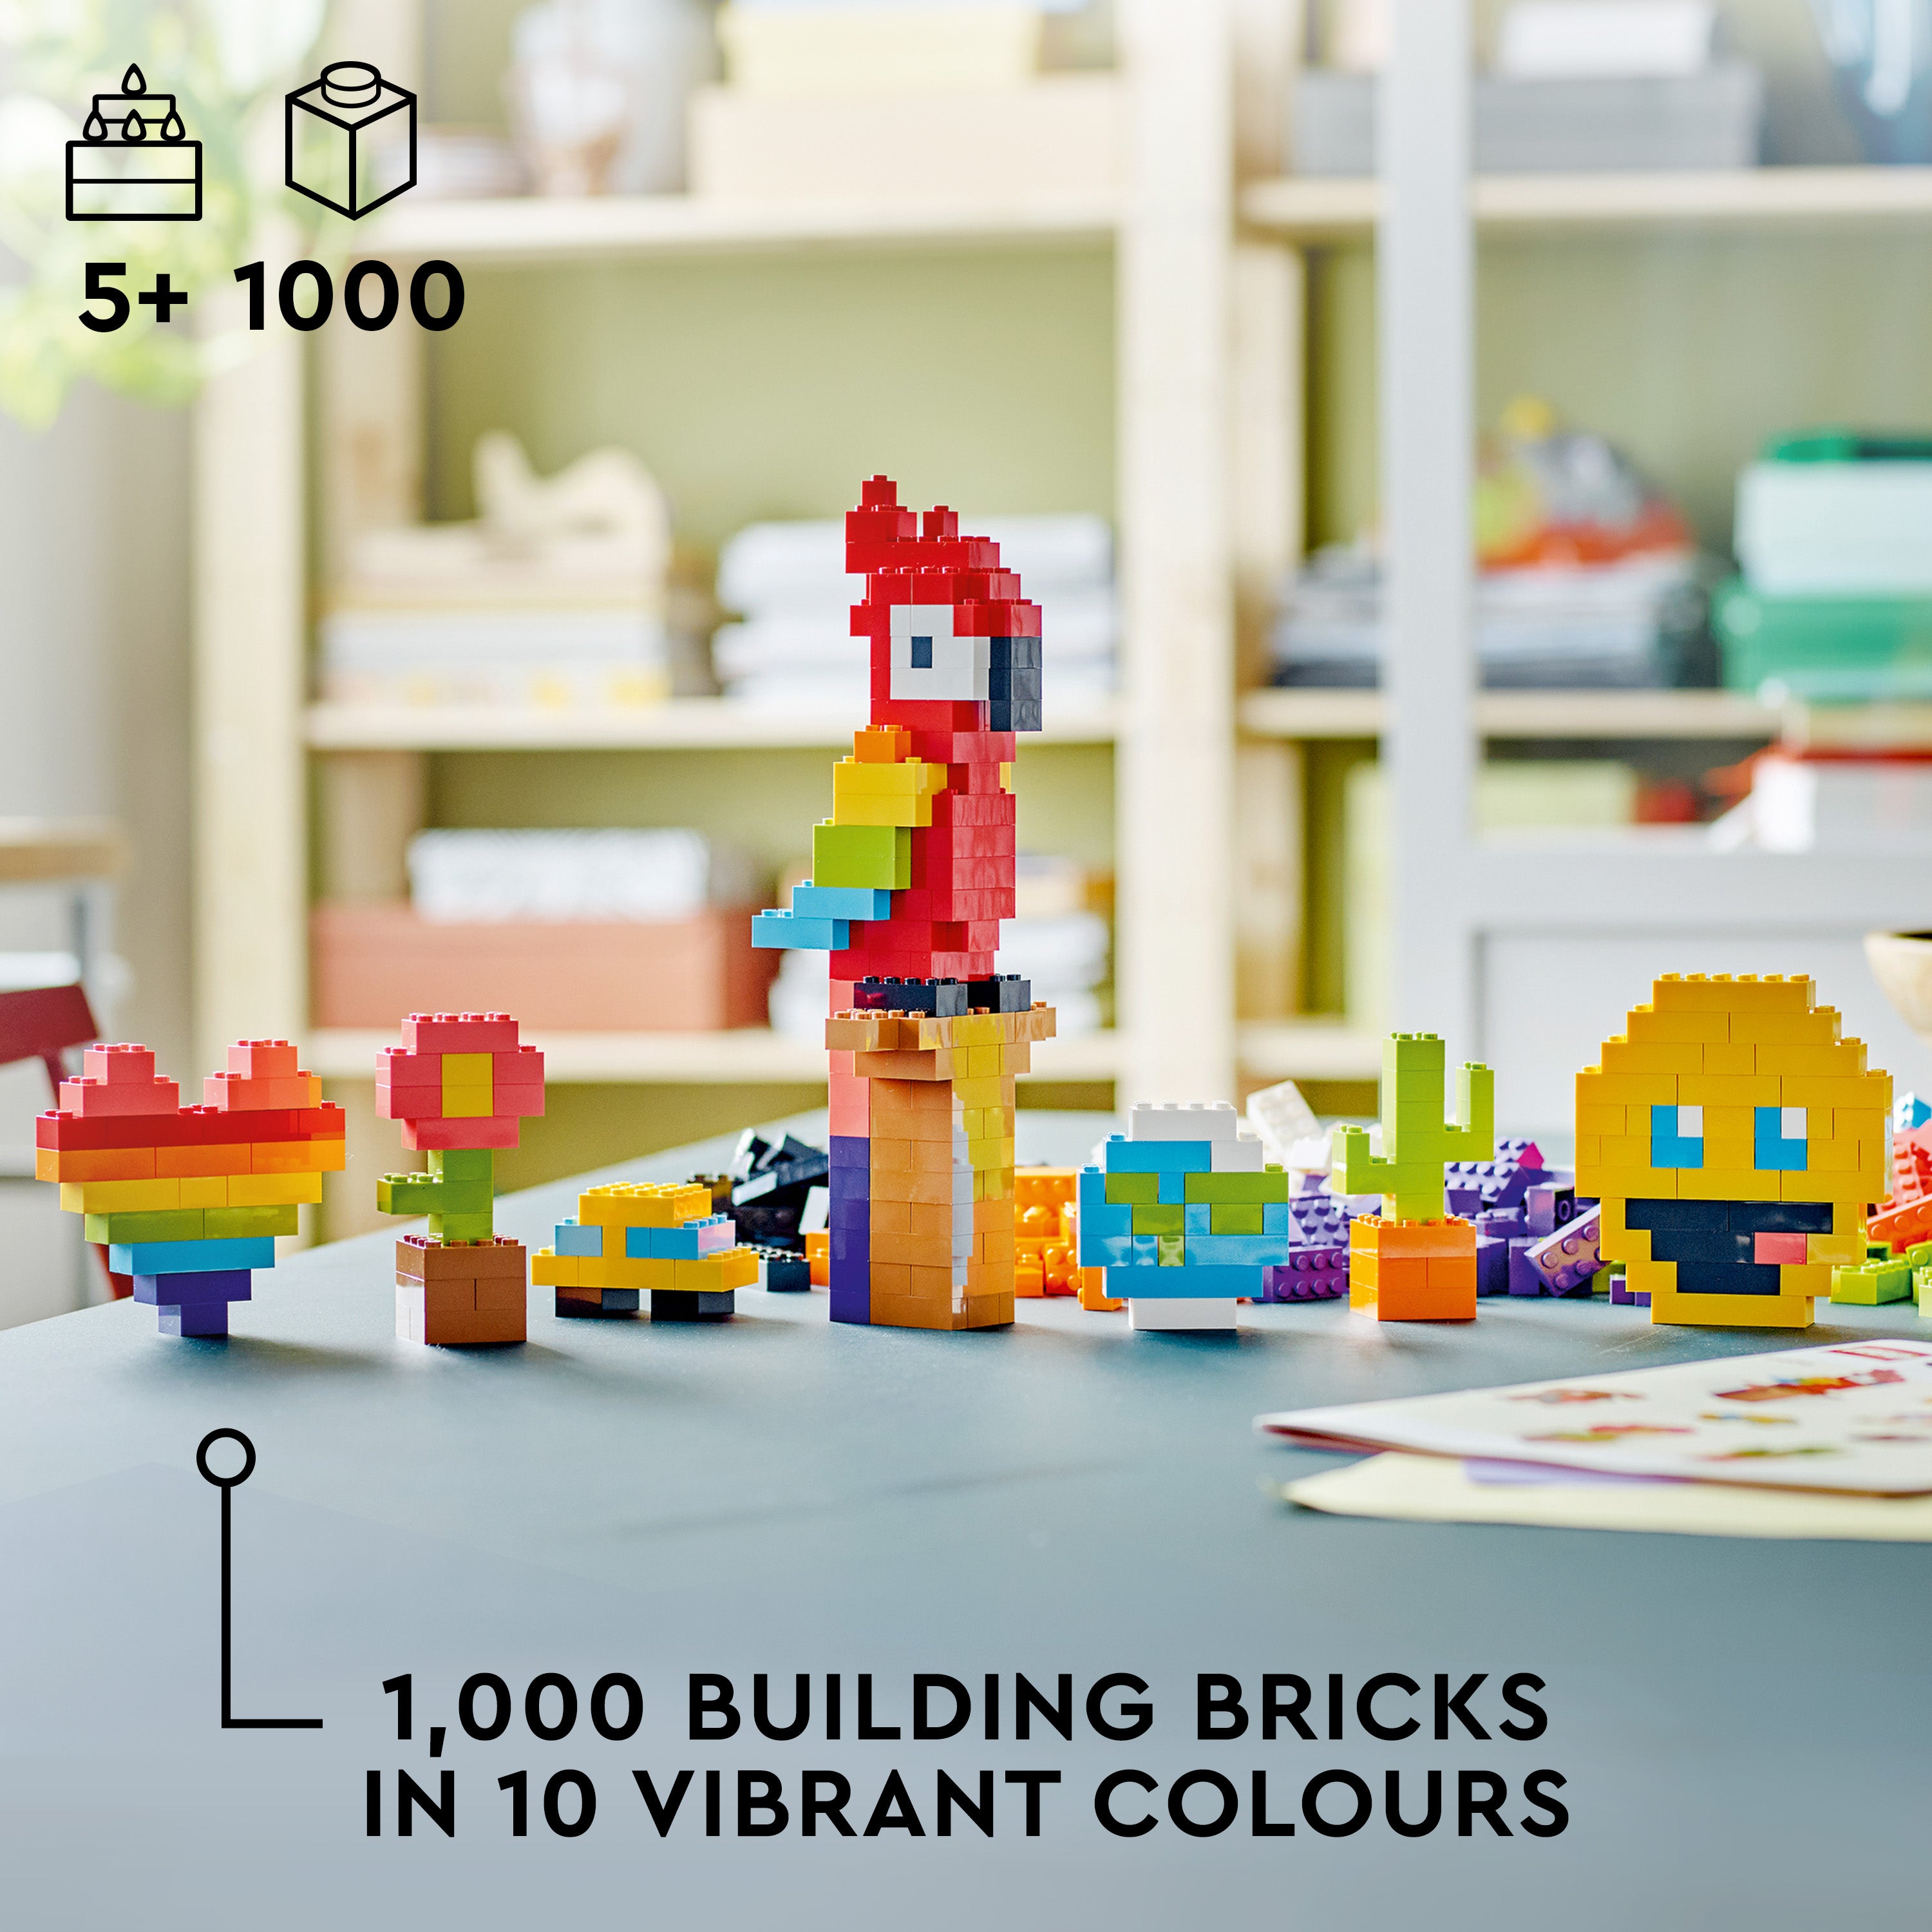 Lego 11030 Lots of Bricks